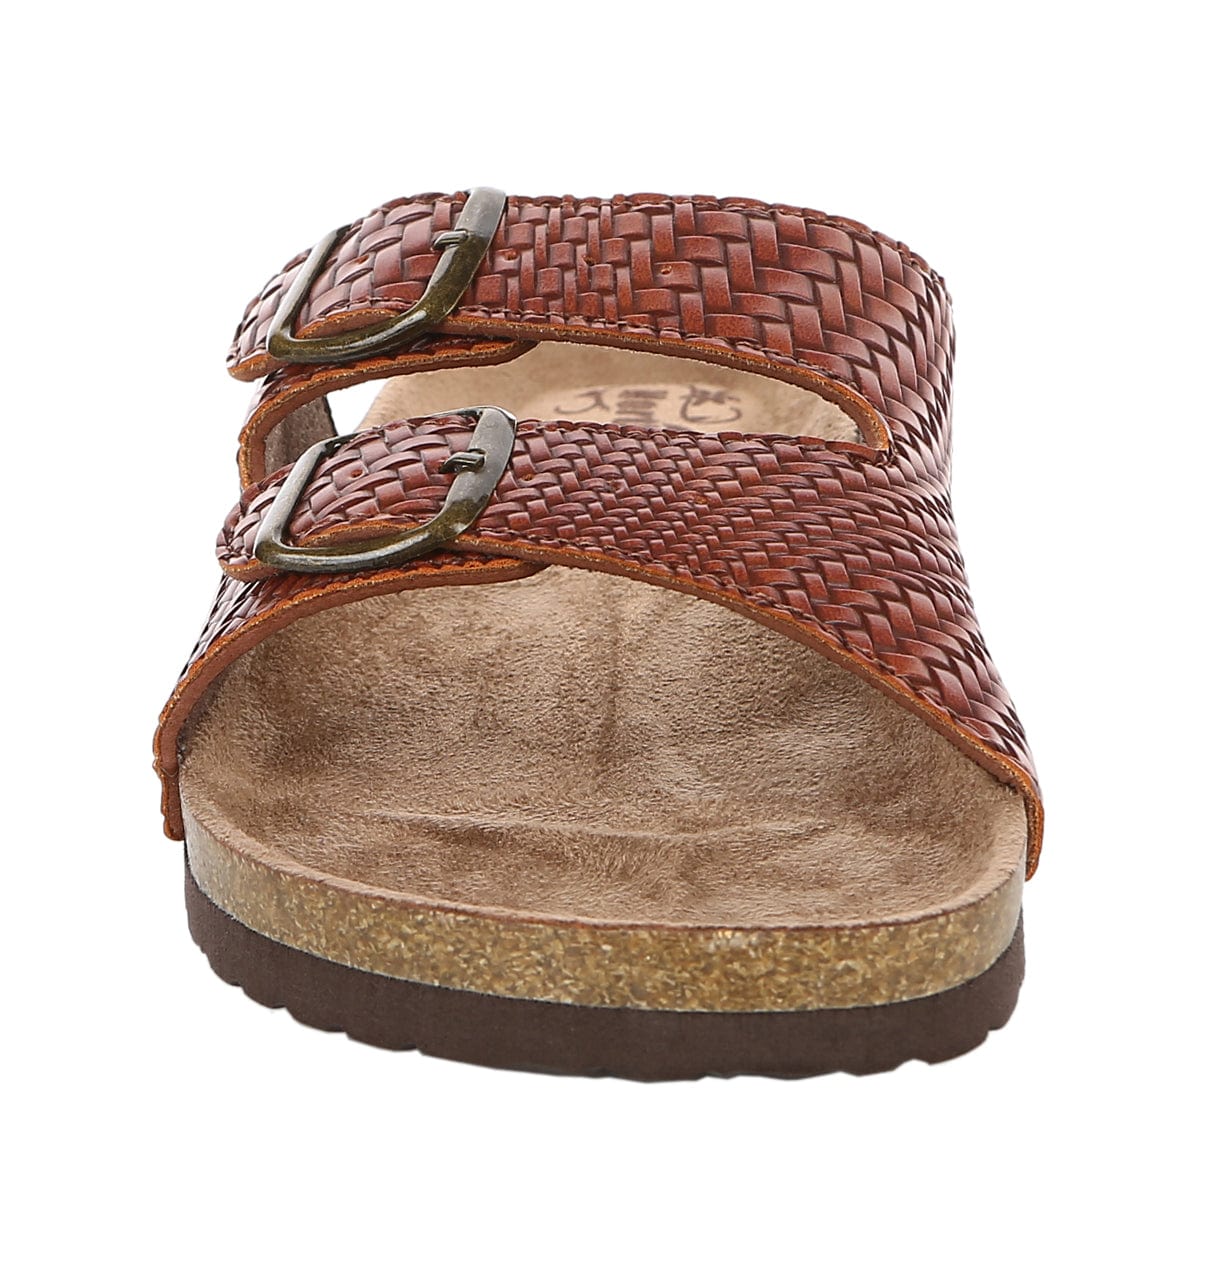 Guess Brown Cork Wedge Leather Strappy Sandals Slingback Espadrilles  Platform 8 | eBay